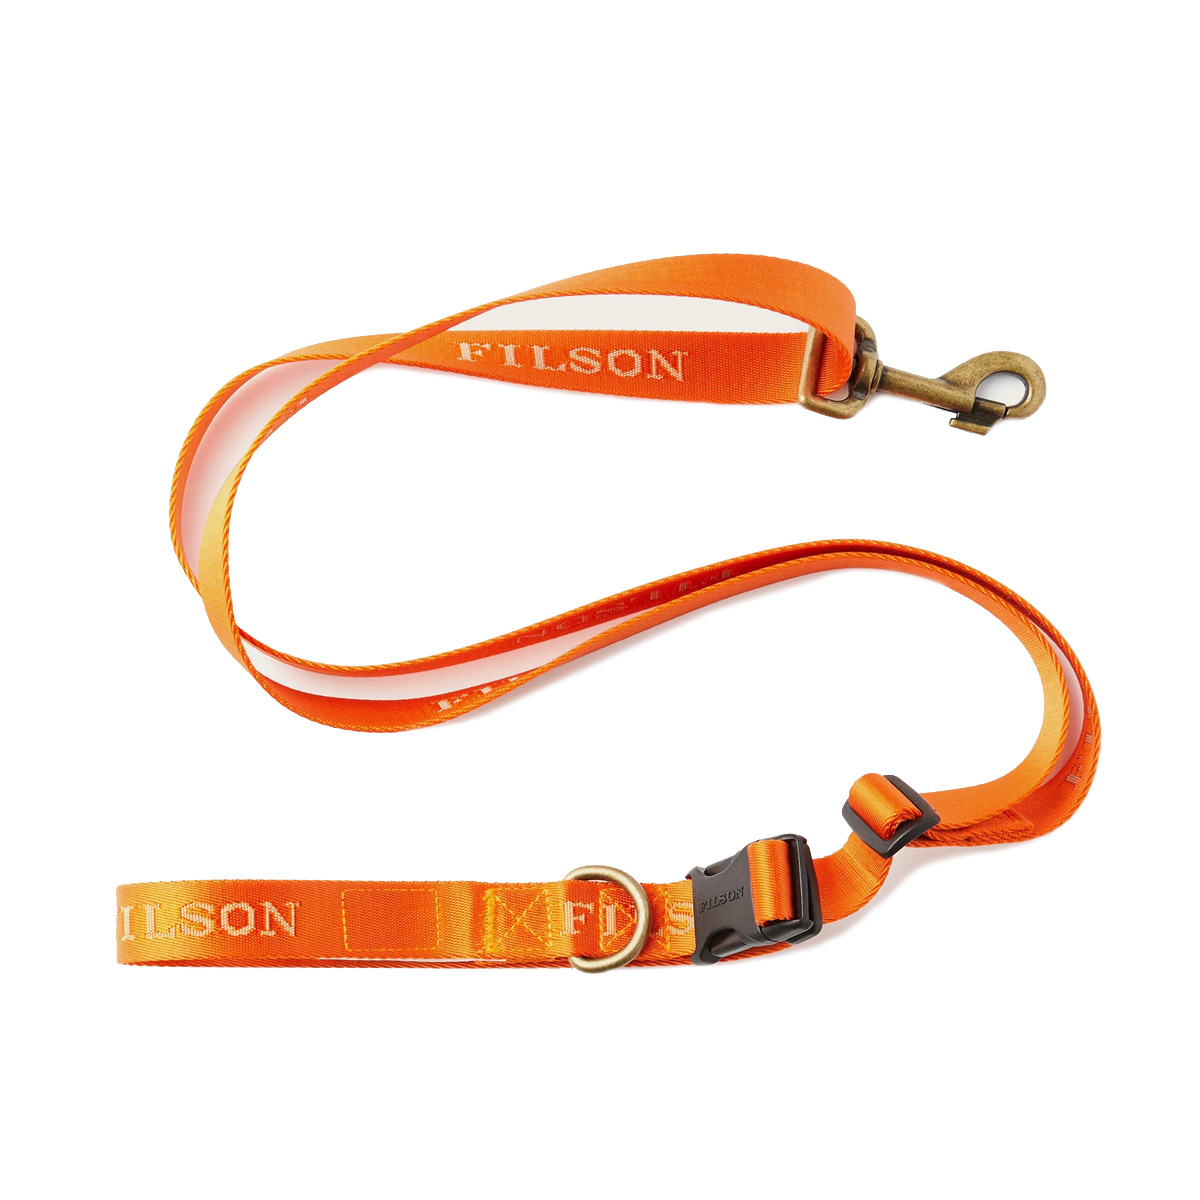 Filson Adjustable Nylon Leash 20218830-Flame, durable Nylon dog Leash is versatile accessory for exercising or training your dog